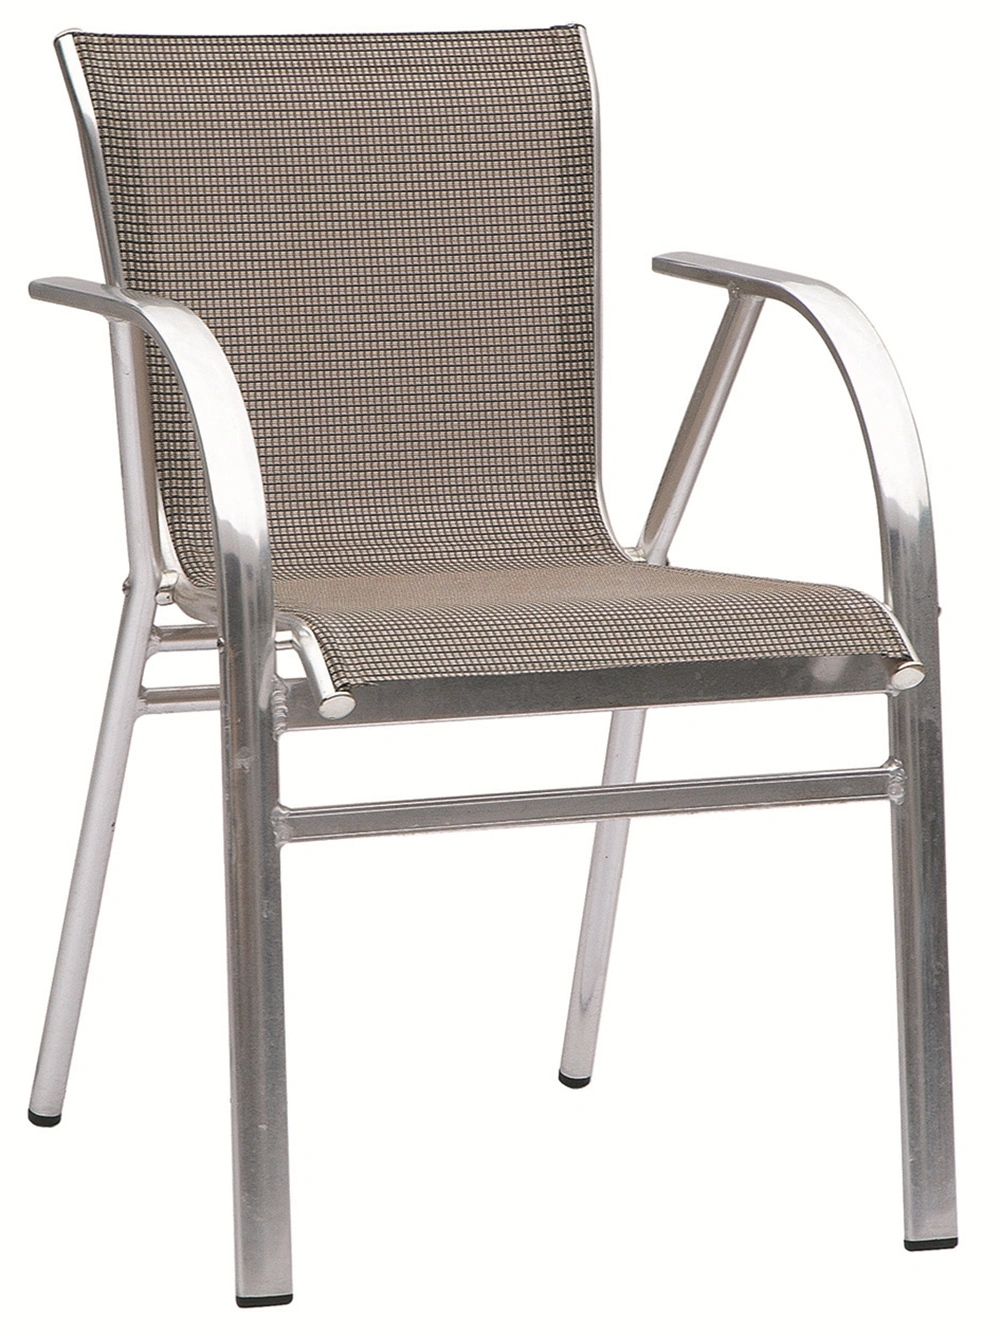 Black Rattan Modern Shiny Aluminum Frame Garden Outdoor Restaurant Dining Room Furniture Chair